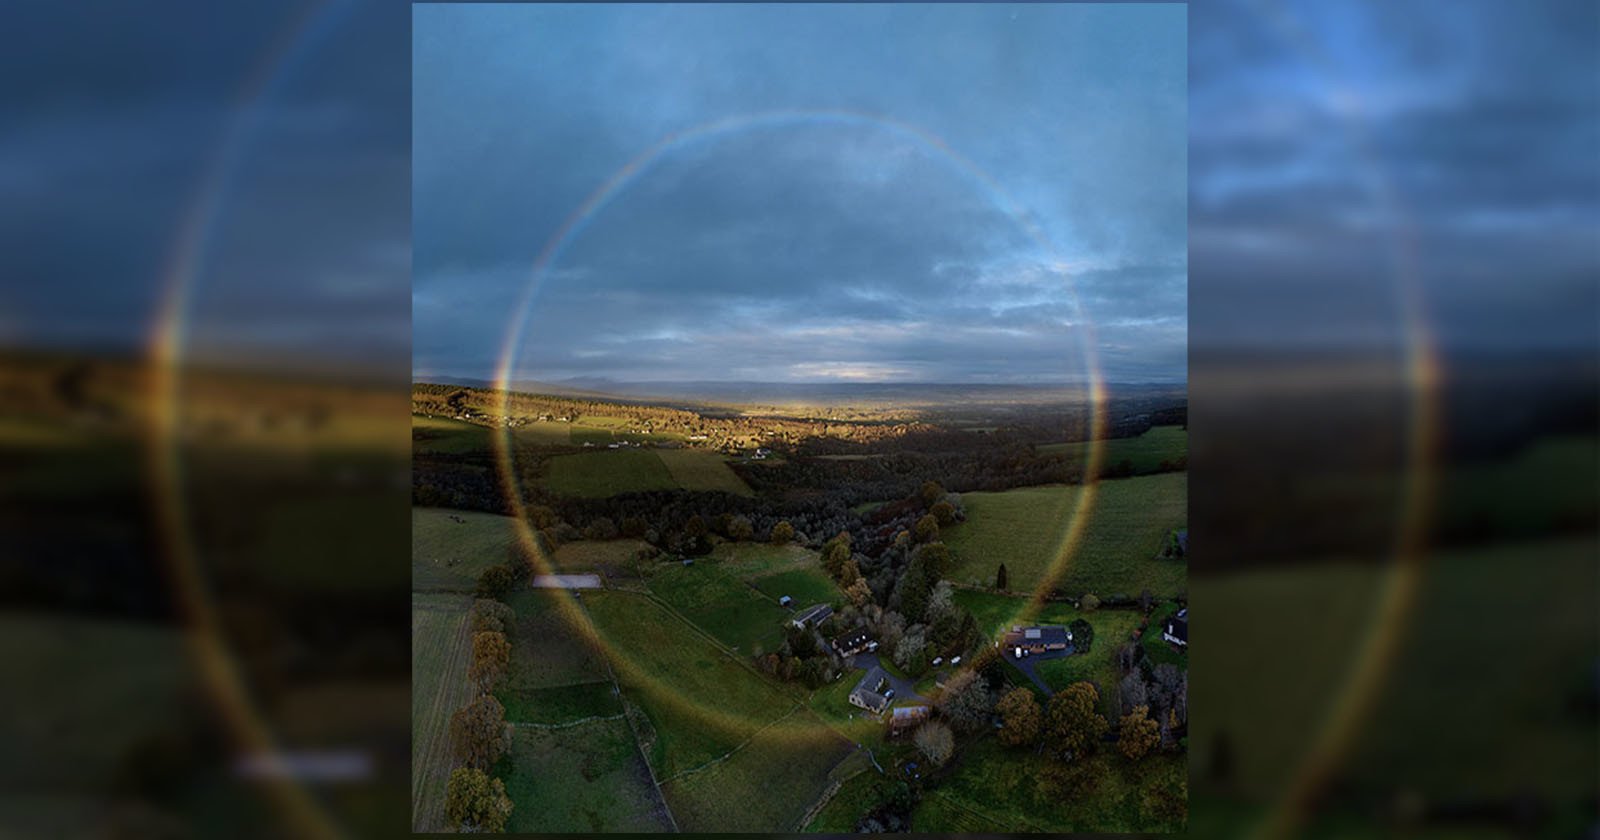  photographer uses drone capture ultra-rare full circle rainbow 